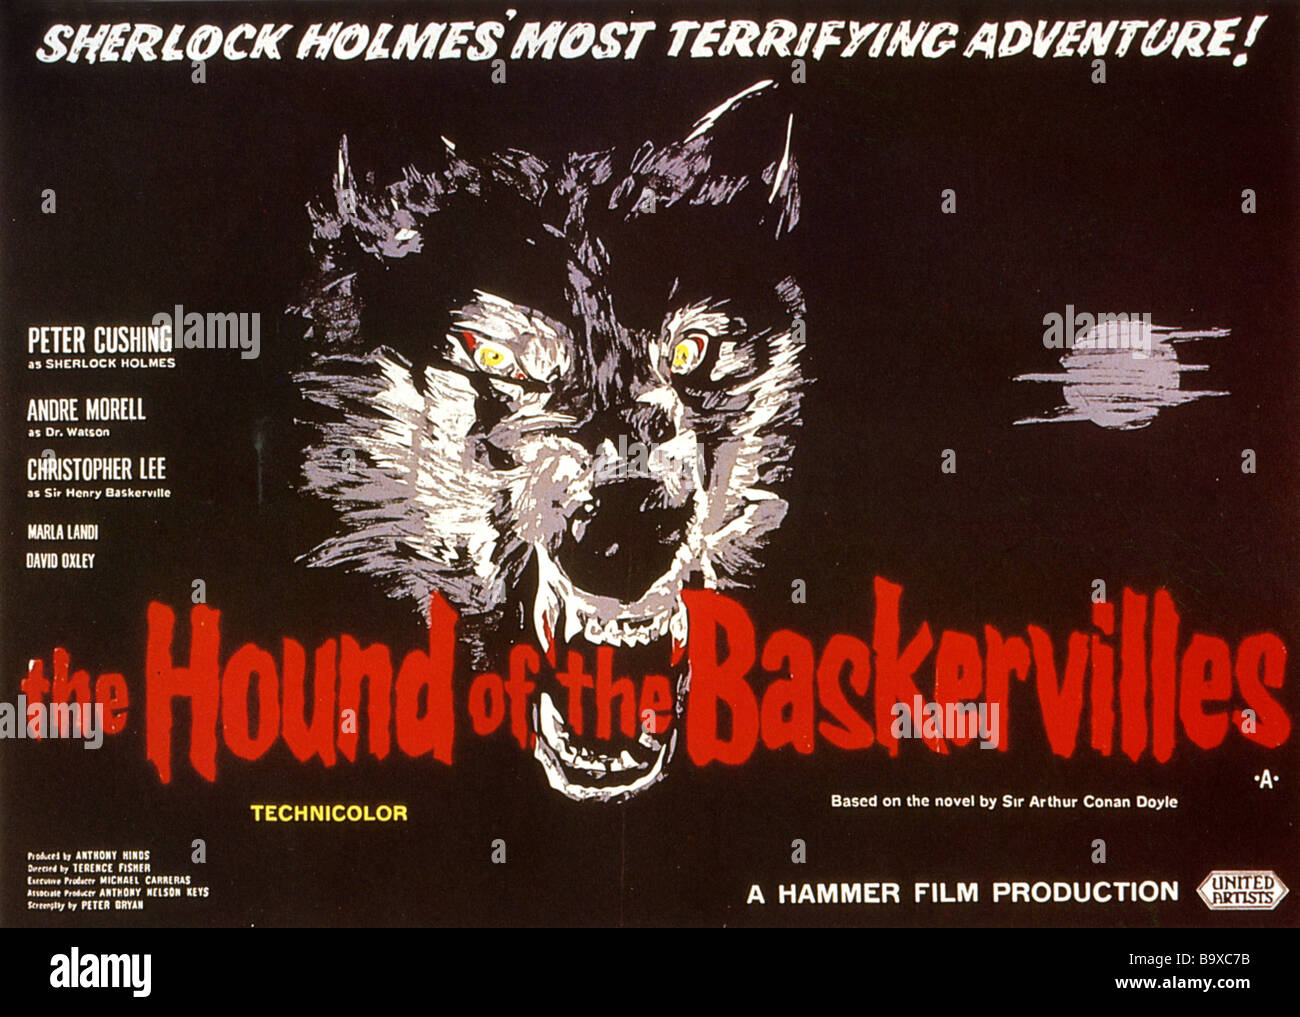 Il Segugio del BASKERVILLES 1959 UA Hammer film con Peter Cushing come Sherlock Holmes Foto Stock